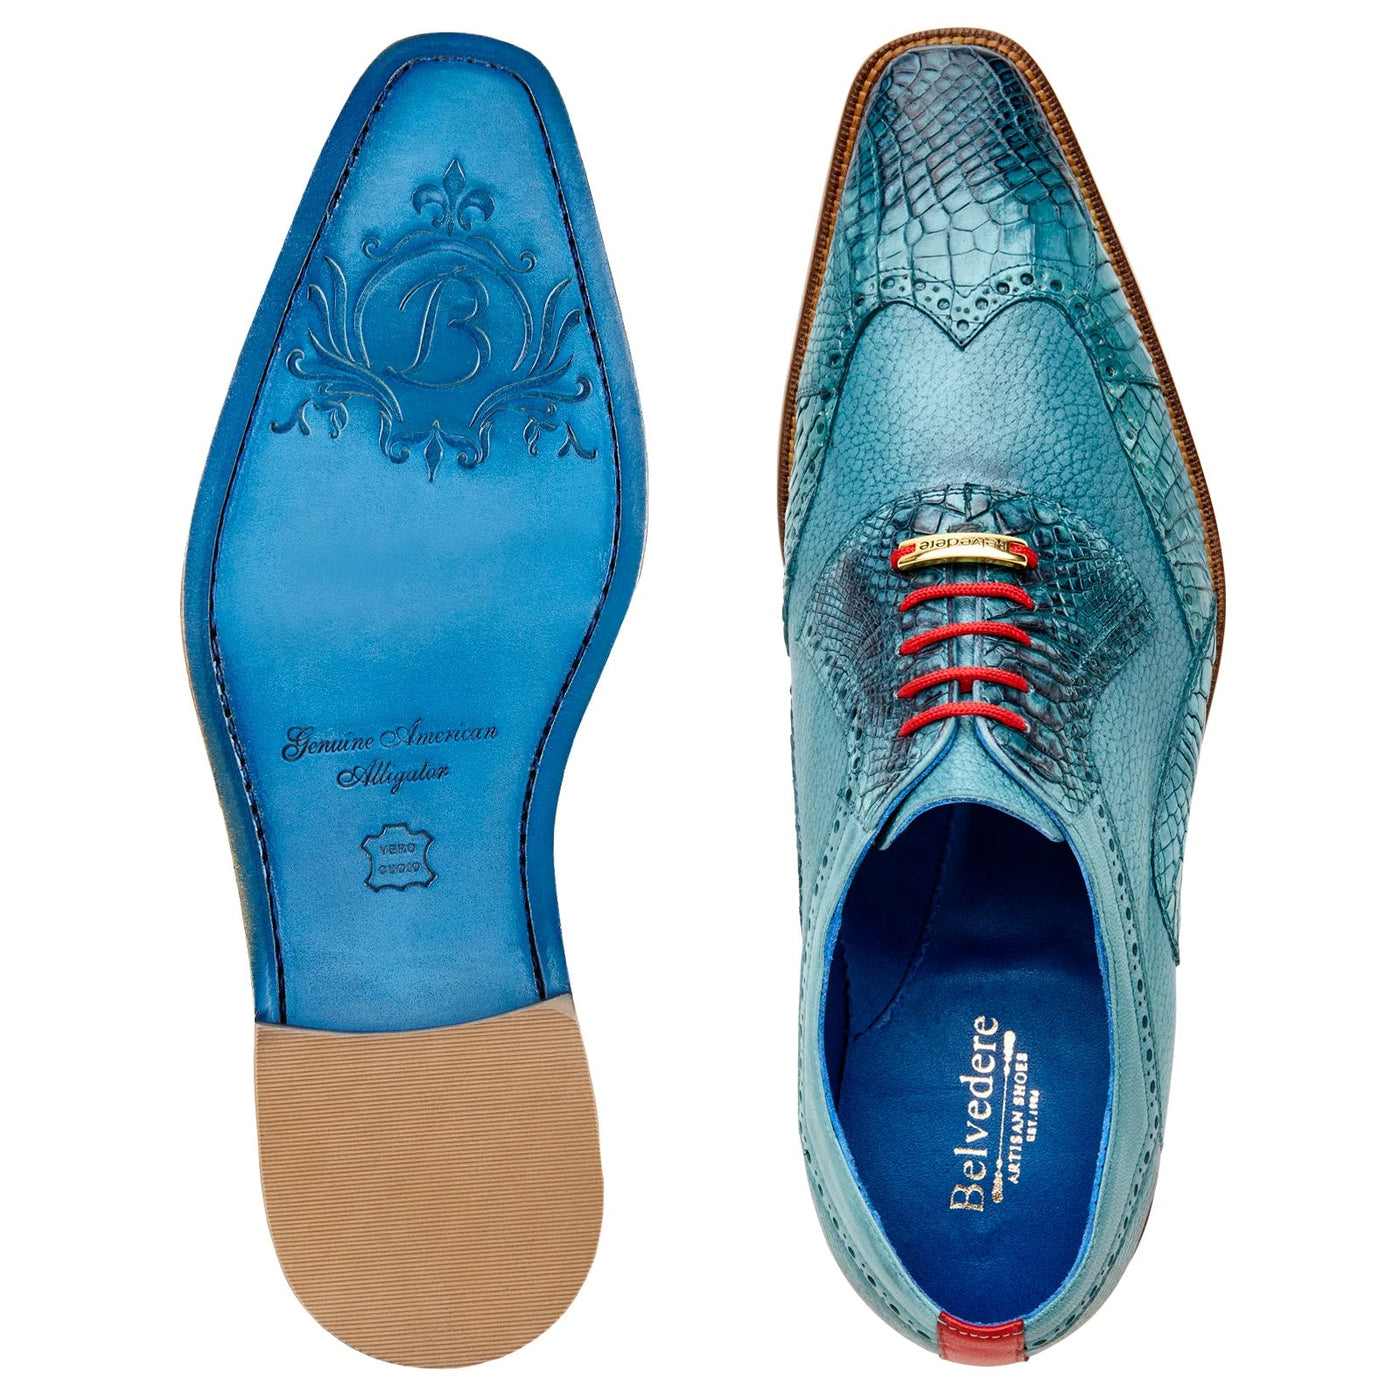 Men's Belvedere Roberto Calf & Alligator Wingtip Dress Shoe in Antique Aqua Blue